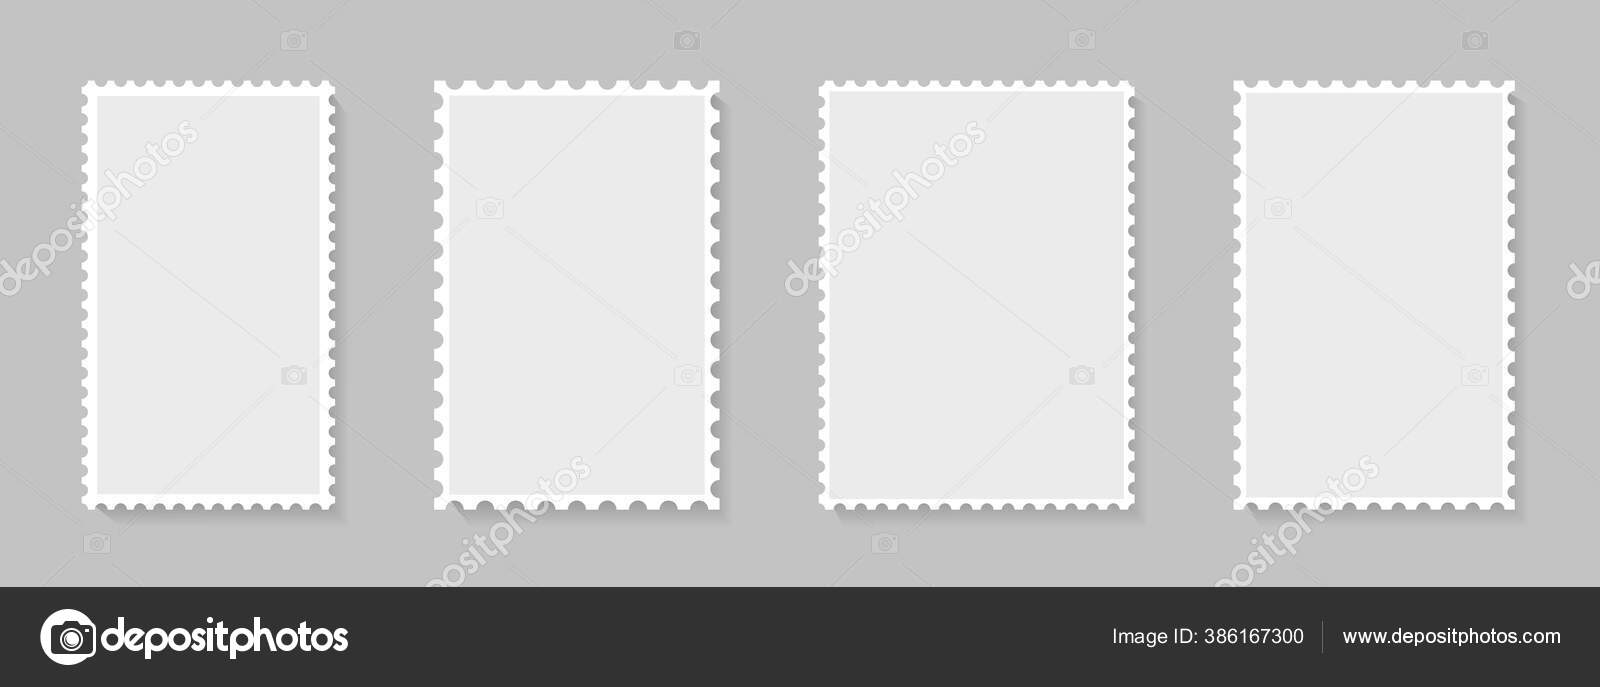 Set Postage stamps template. Blank frame of postal stamp for mail envelope.  Stock Vector